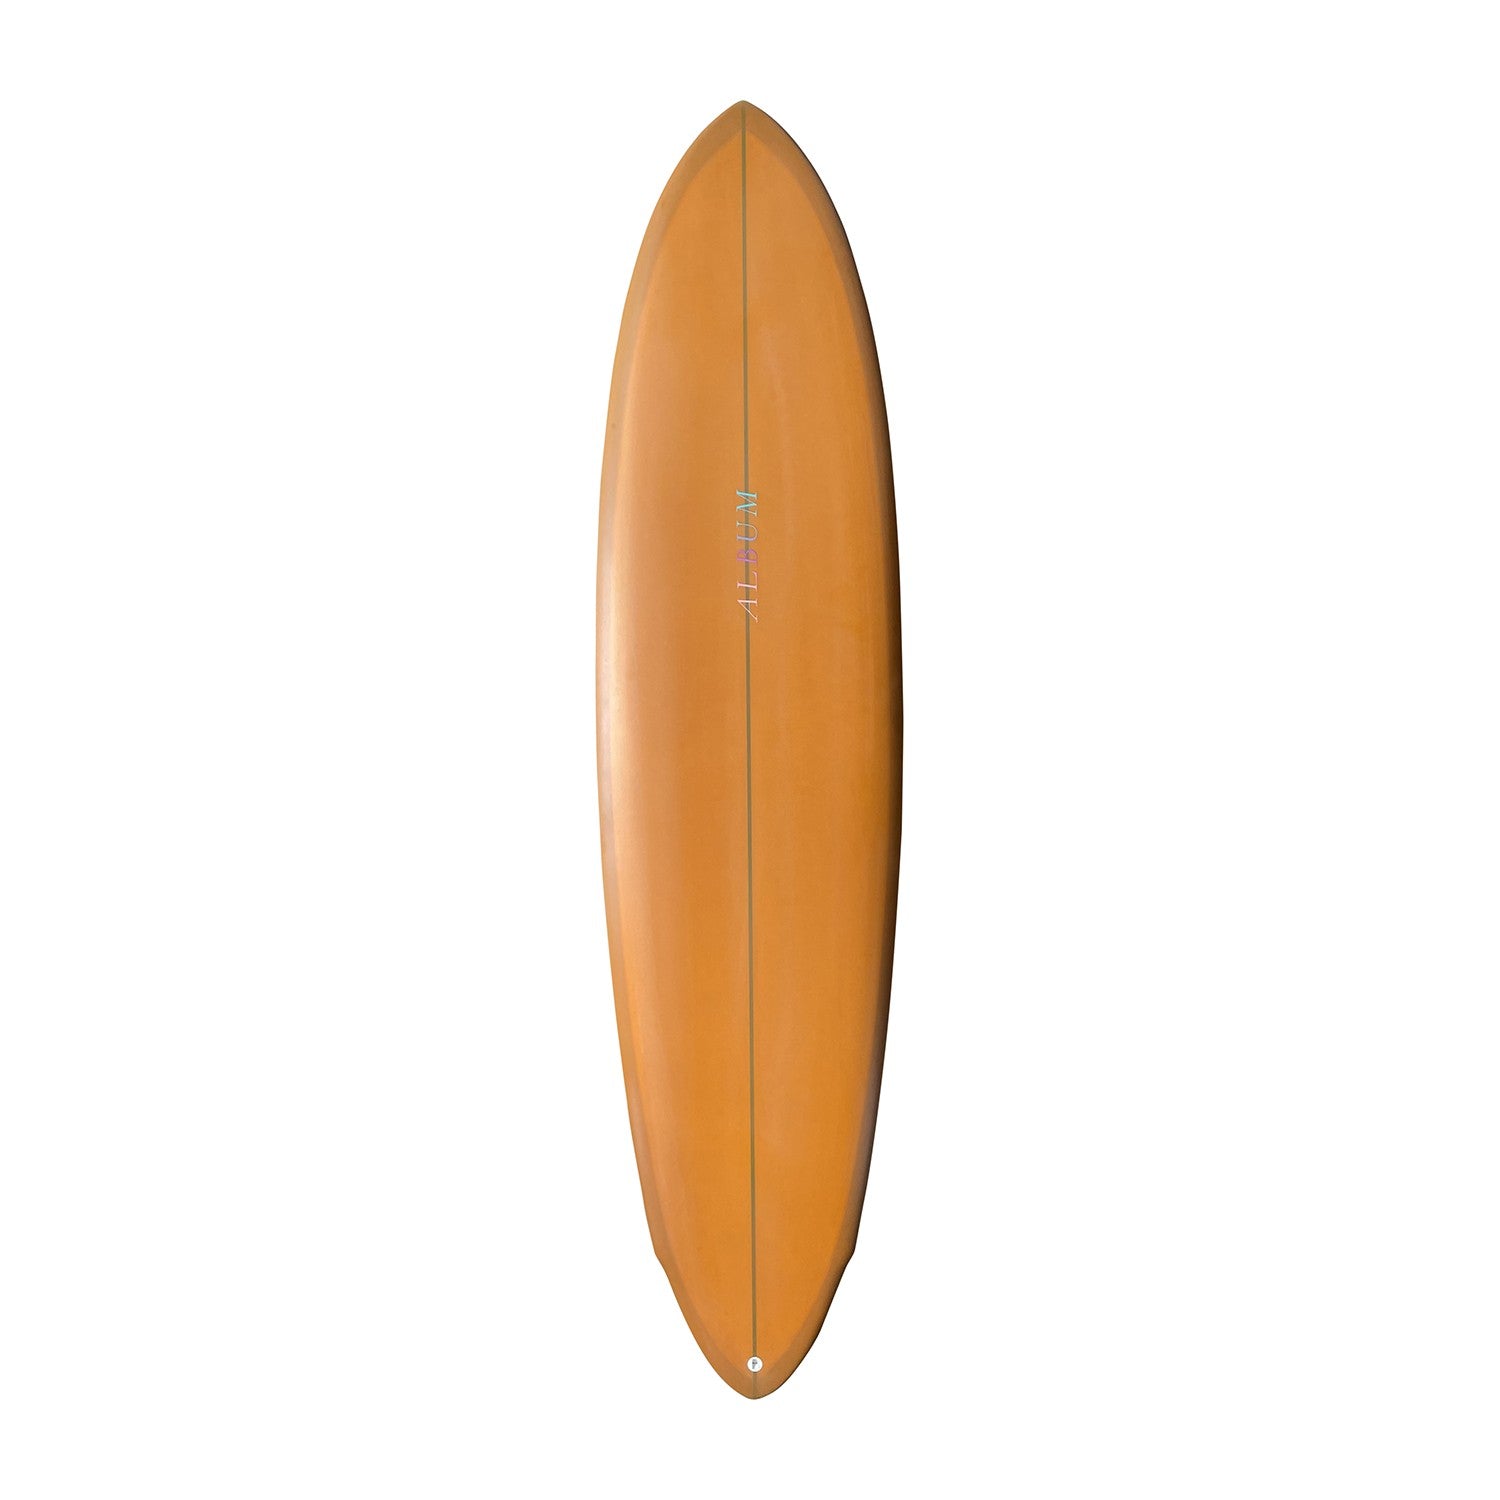 ALBUM Surfboards - Darkness Twin 7'4 (PU) - Burnt Orange